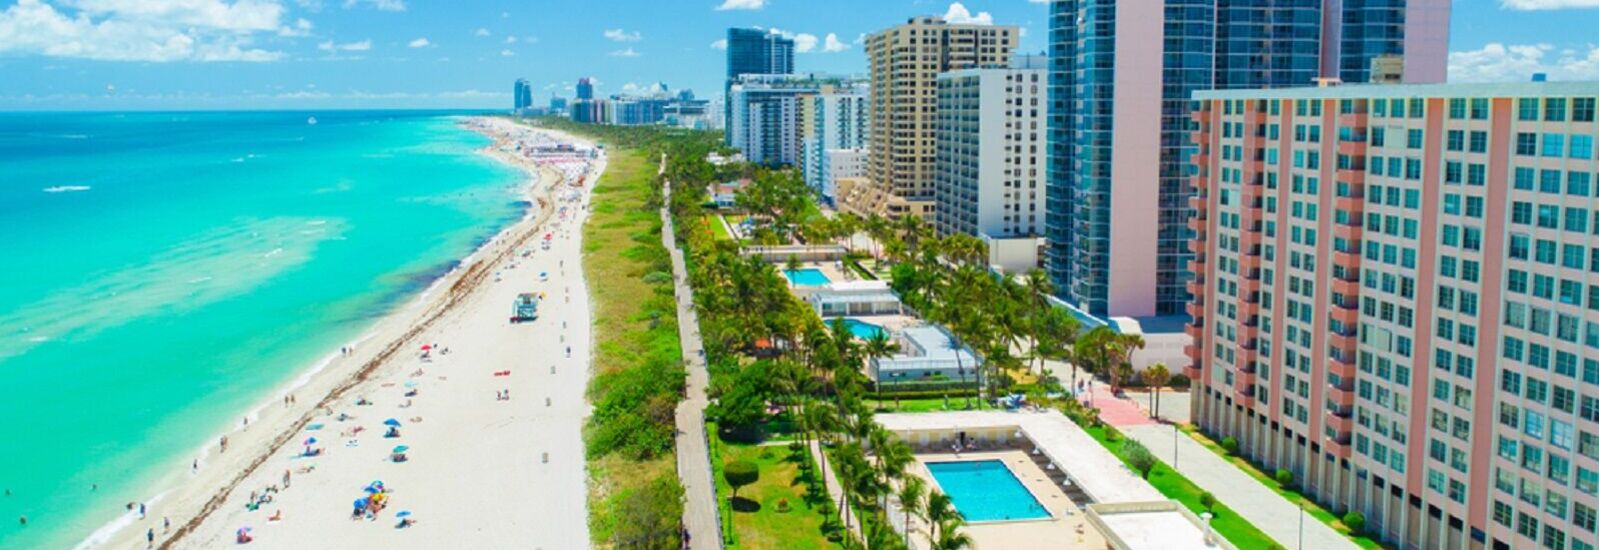 Aerial view South Beach in Miami, Florida